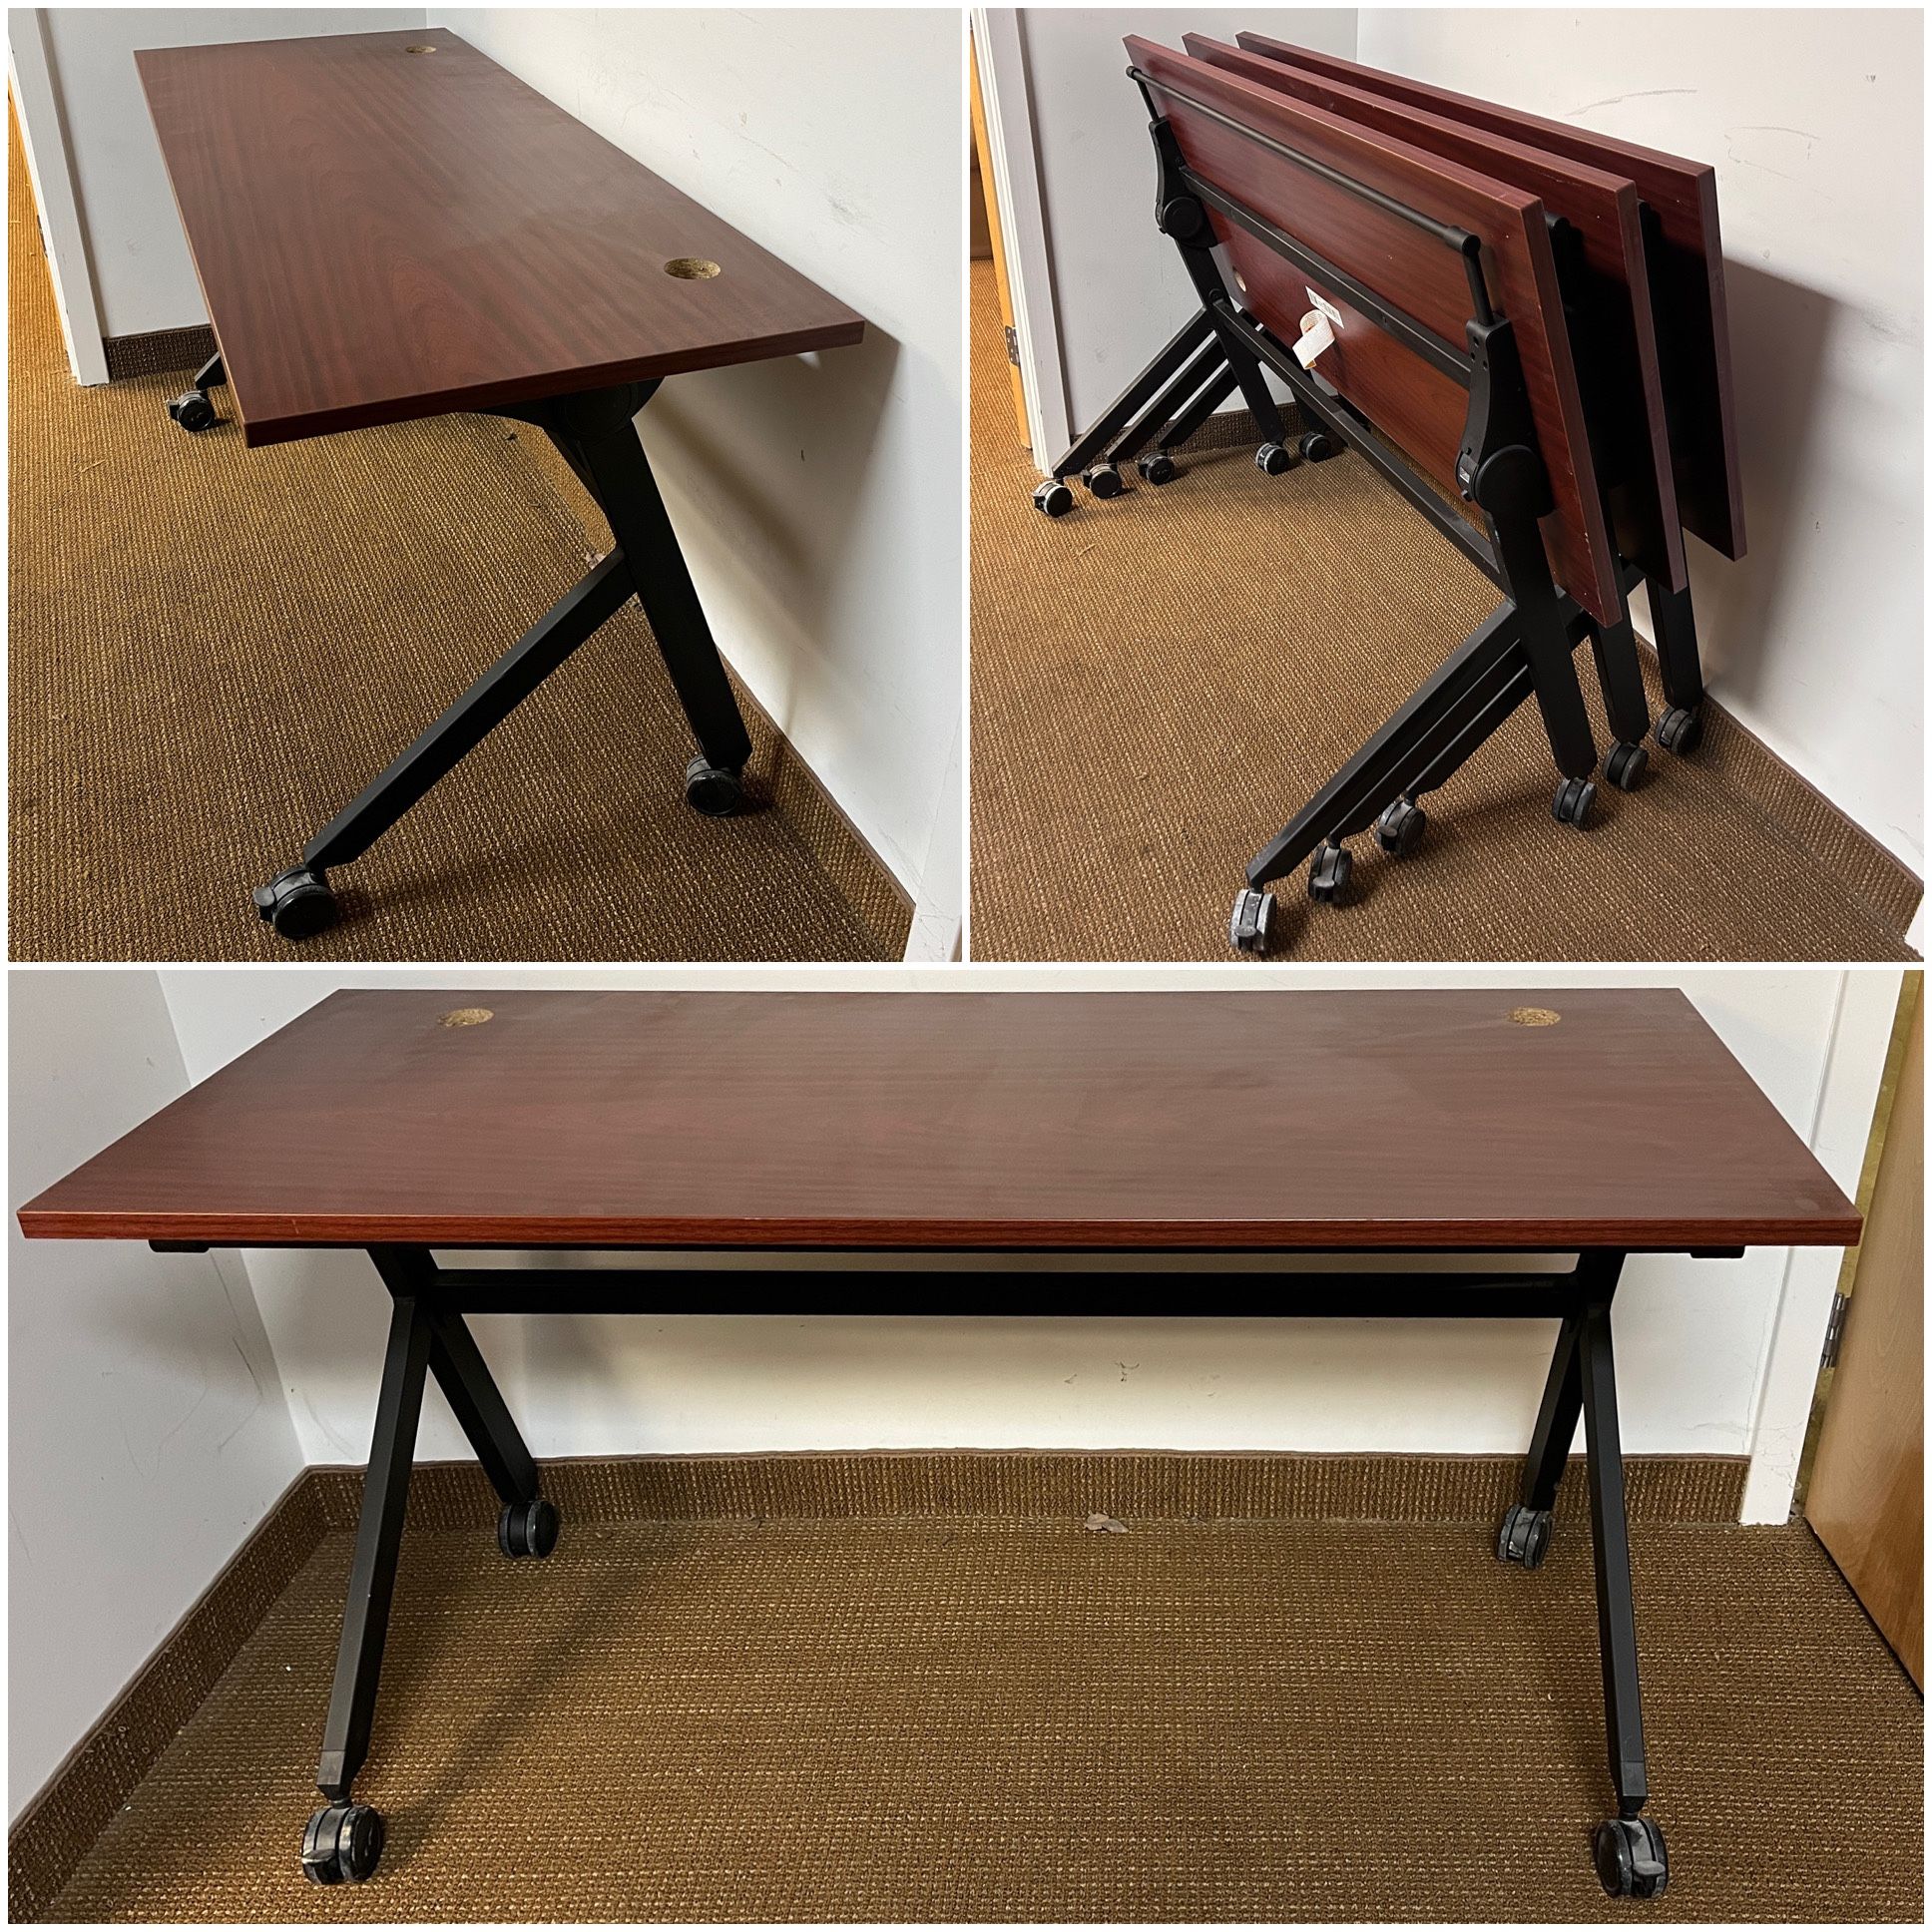 (3) Multipurpose Table Flip Base Table, Wheels. $70ea. $200 all 3. Desk. Study Table. Work surface tilts from work mode to nesting. Writing Desk.